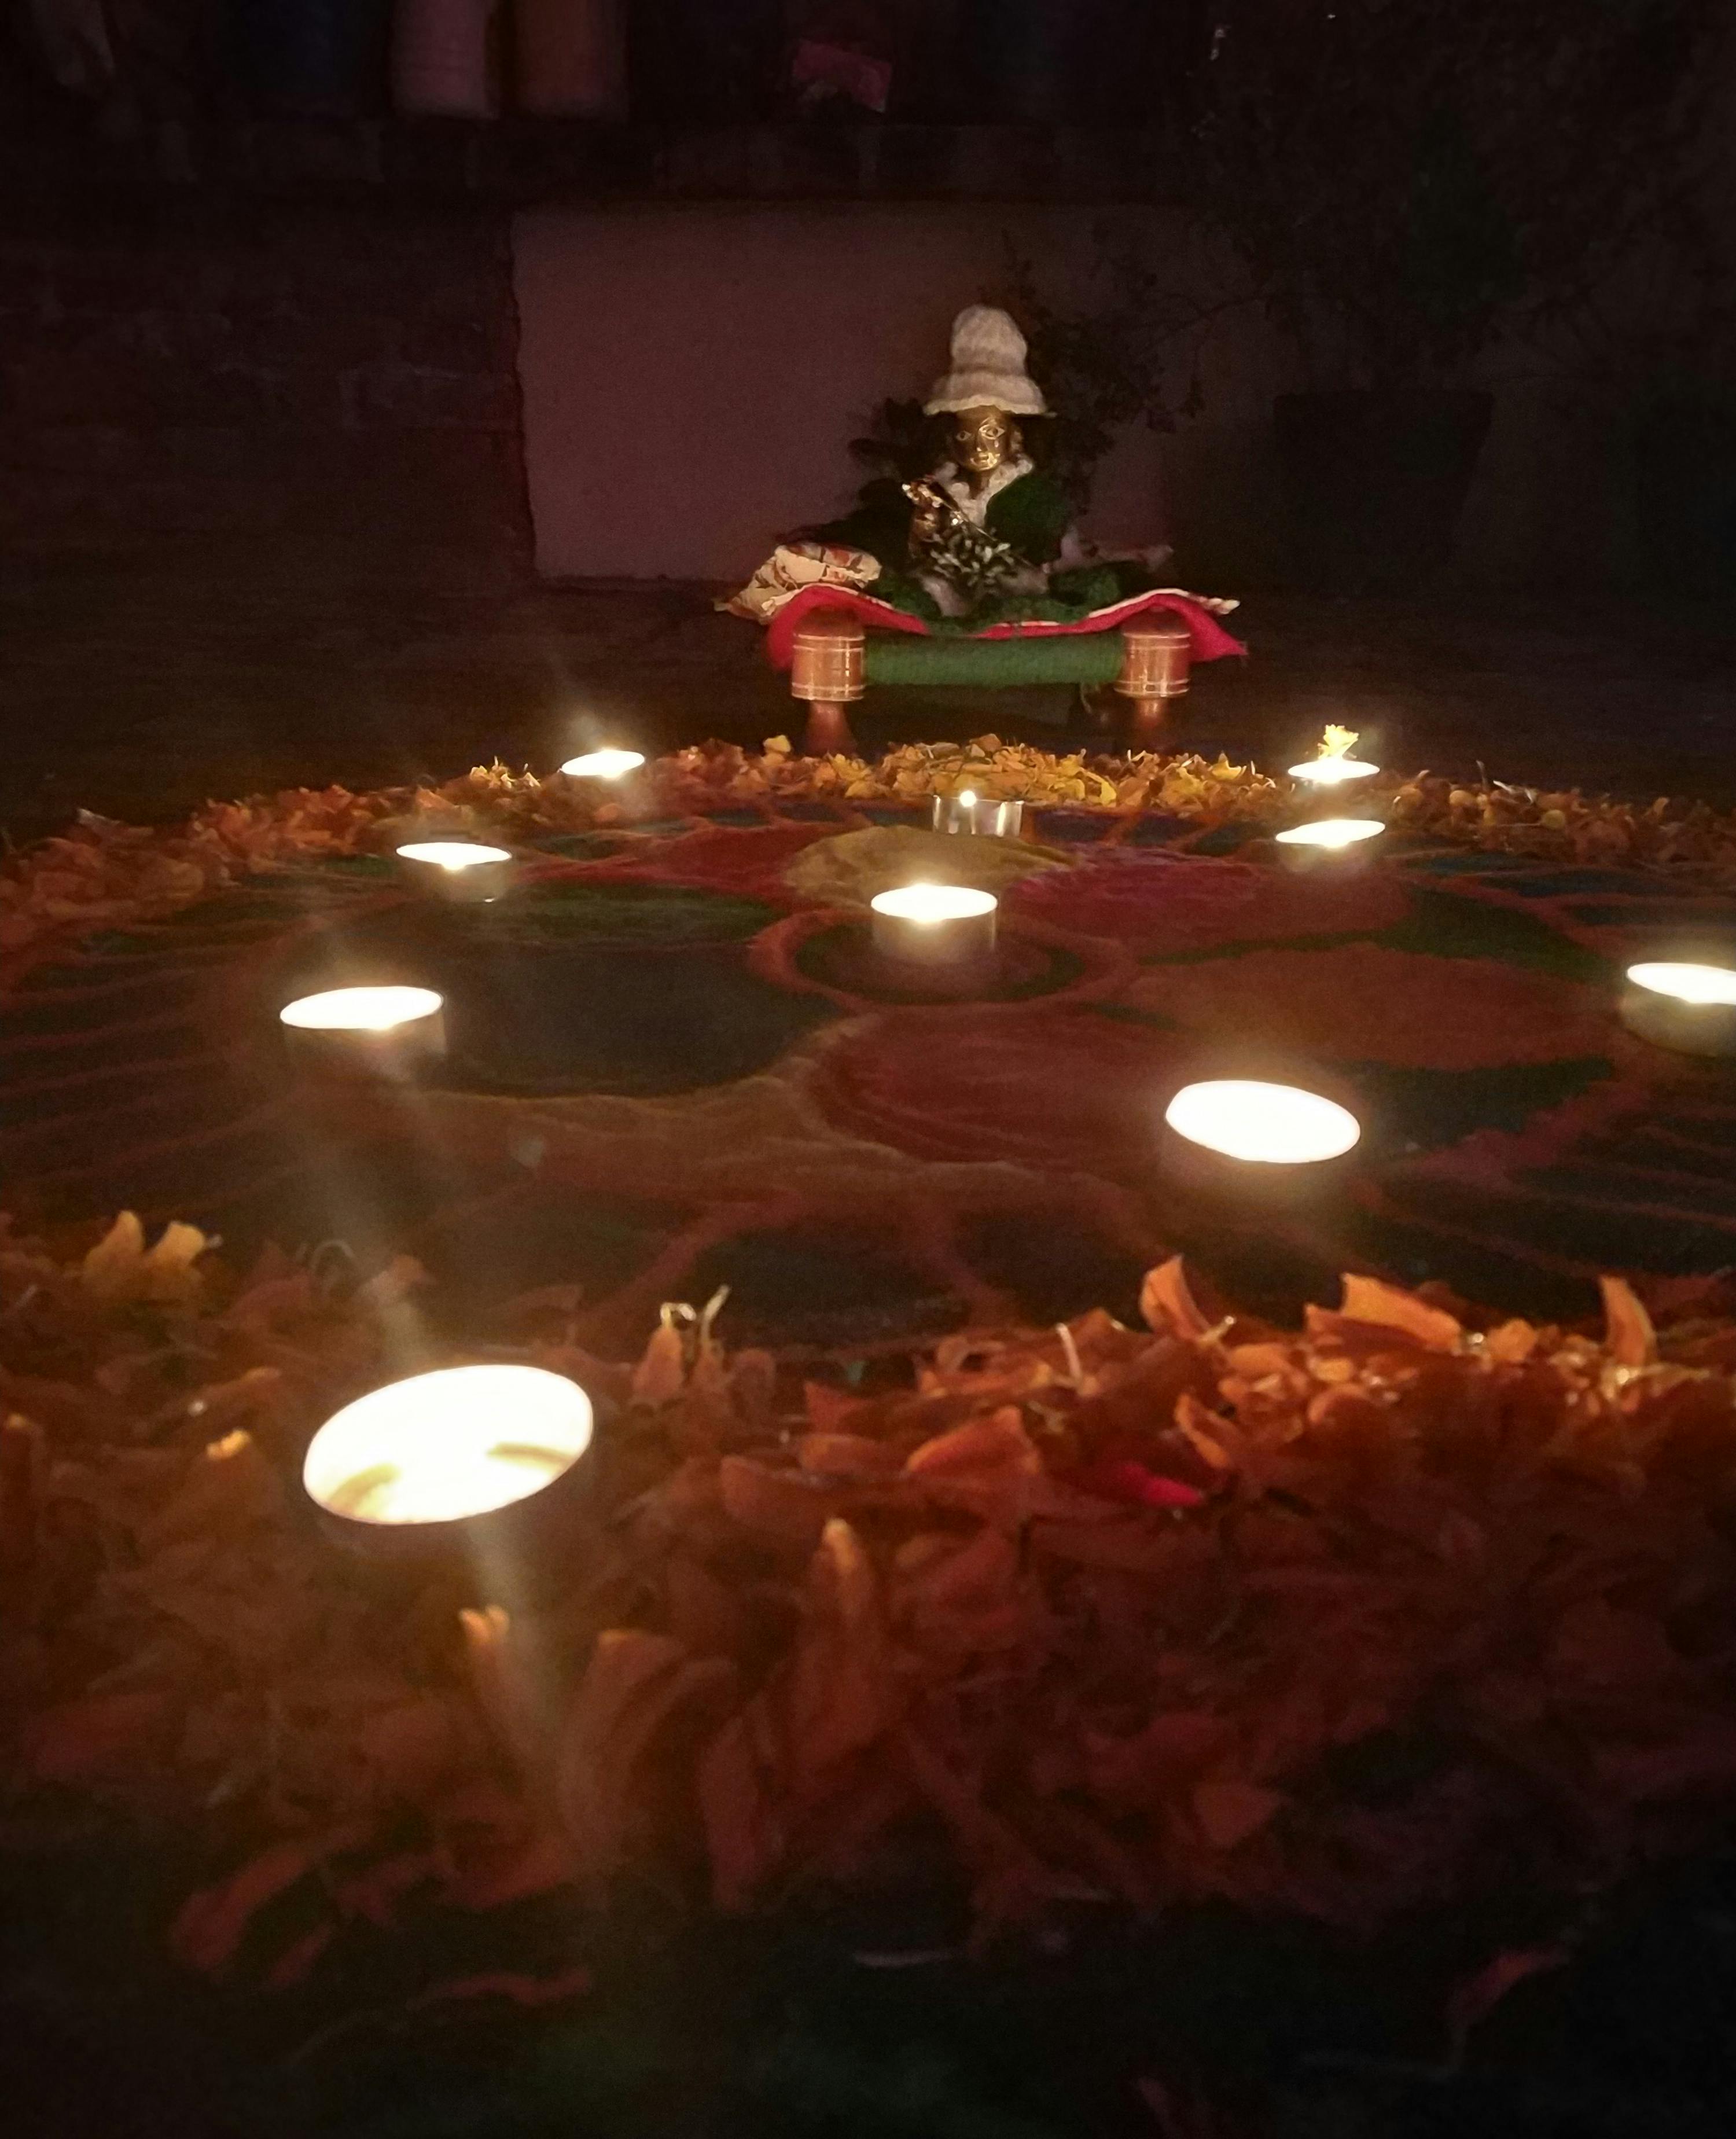 Free stock photo of Diwali, god, village